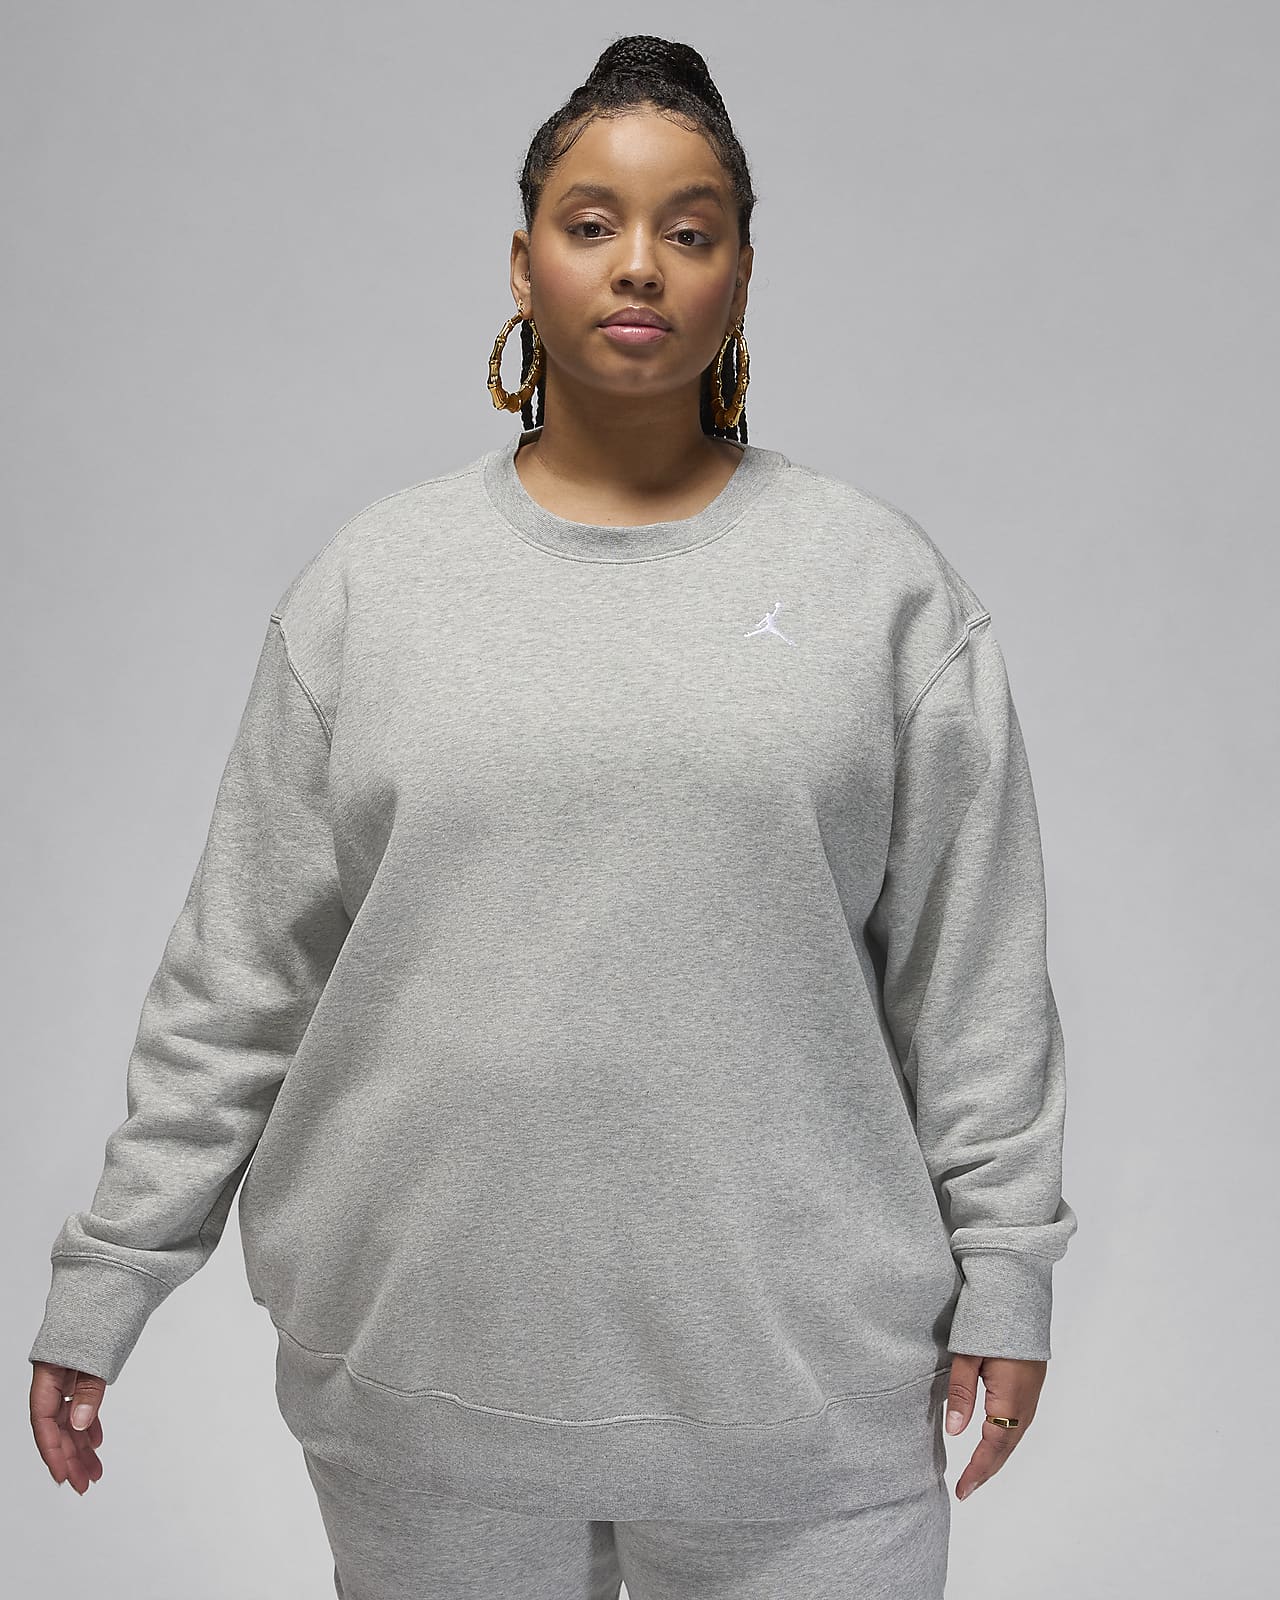 Jordan Brooklyn Fleece Women's Crew-Neck Sweatshirt (Plus Size)